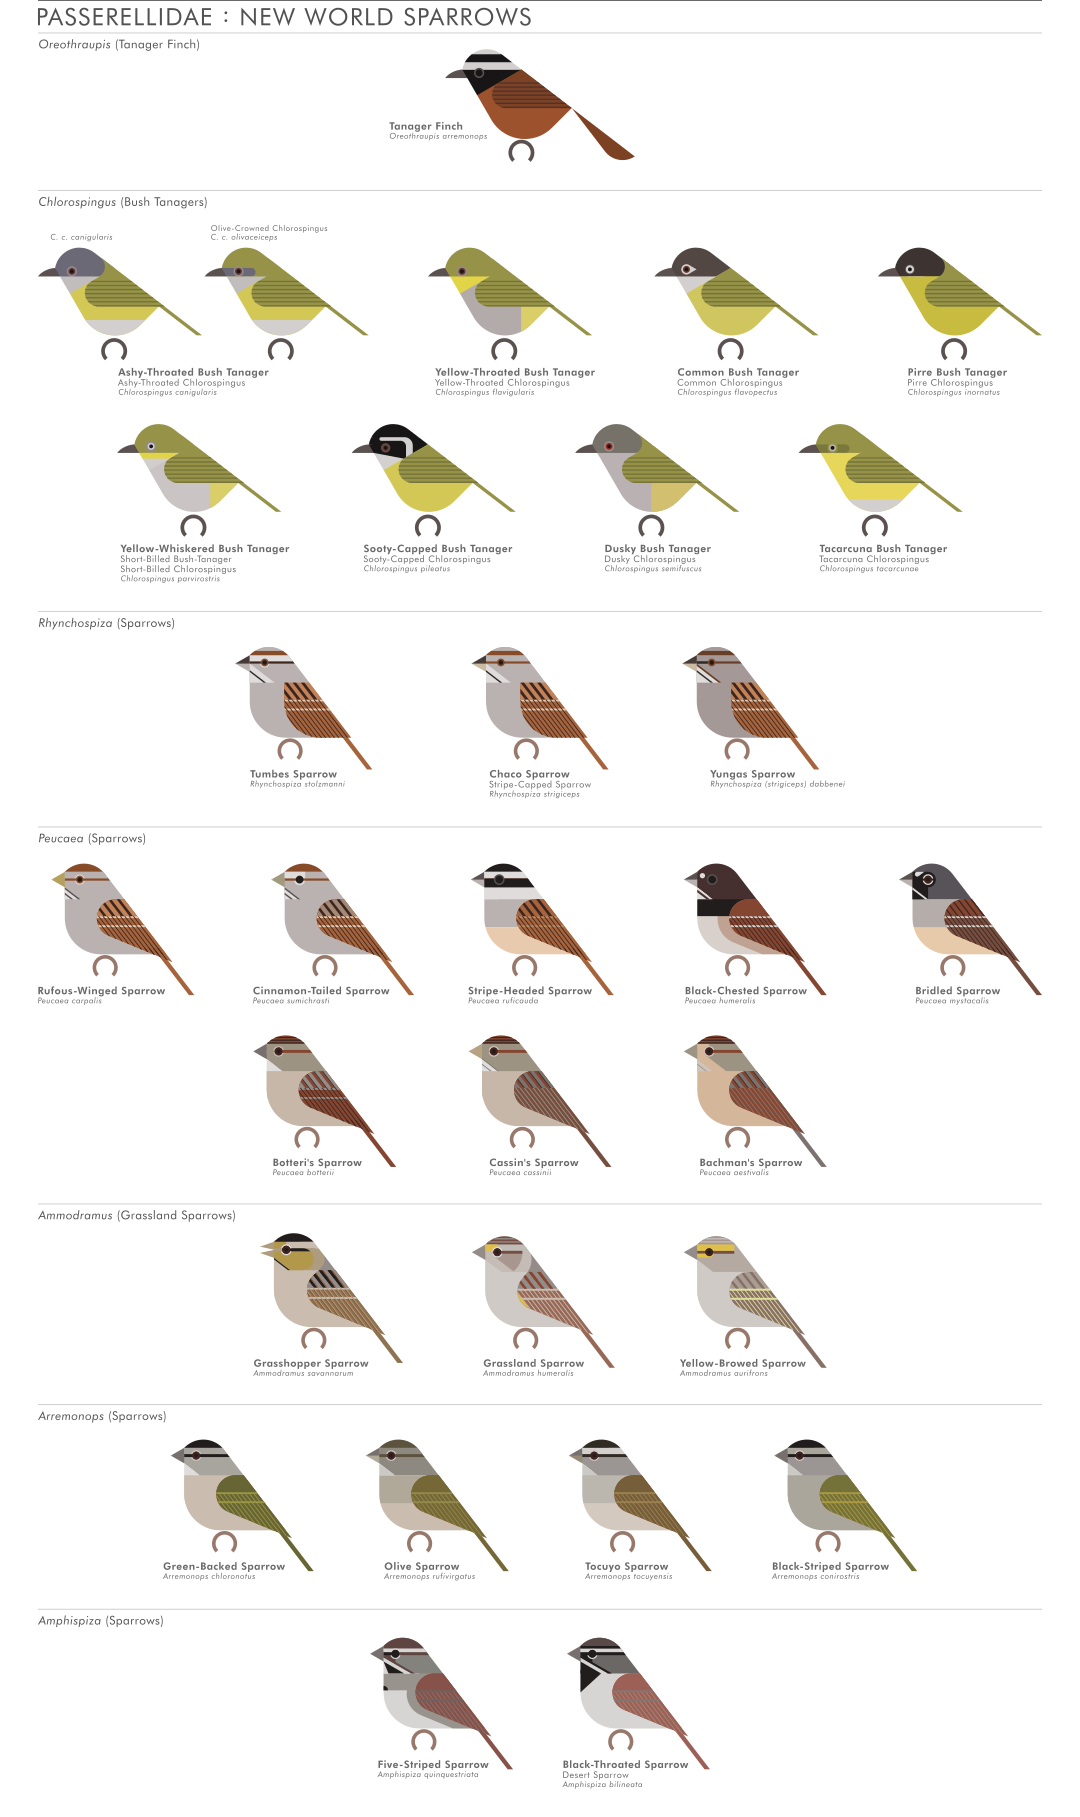 scott partridge - AVE - avian vector encyclopedia - new world sparrows - bird vector art